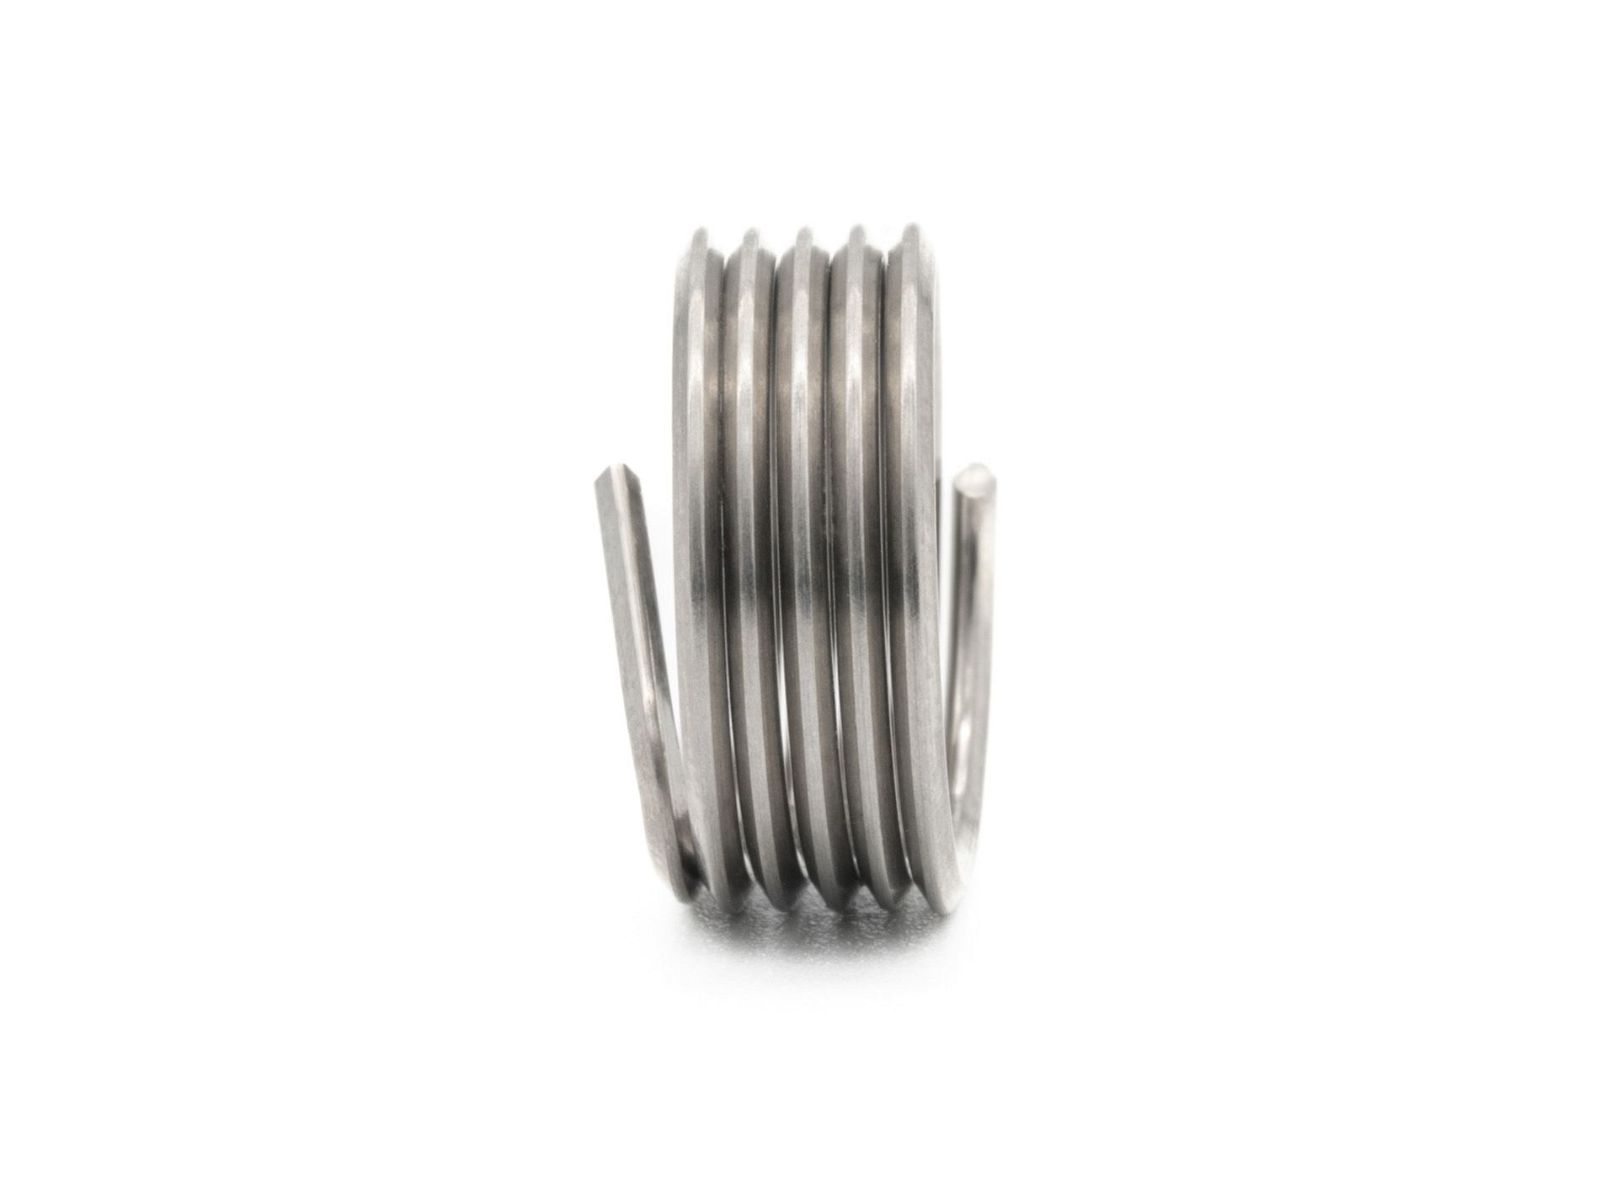 BaerCoil Wire Thread Inserts G (BSP) 1“ x 11 - 2.0 D (50.8 mm) - free running - 5 pcs.